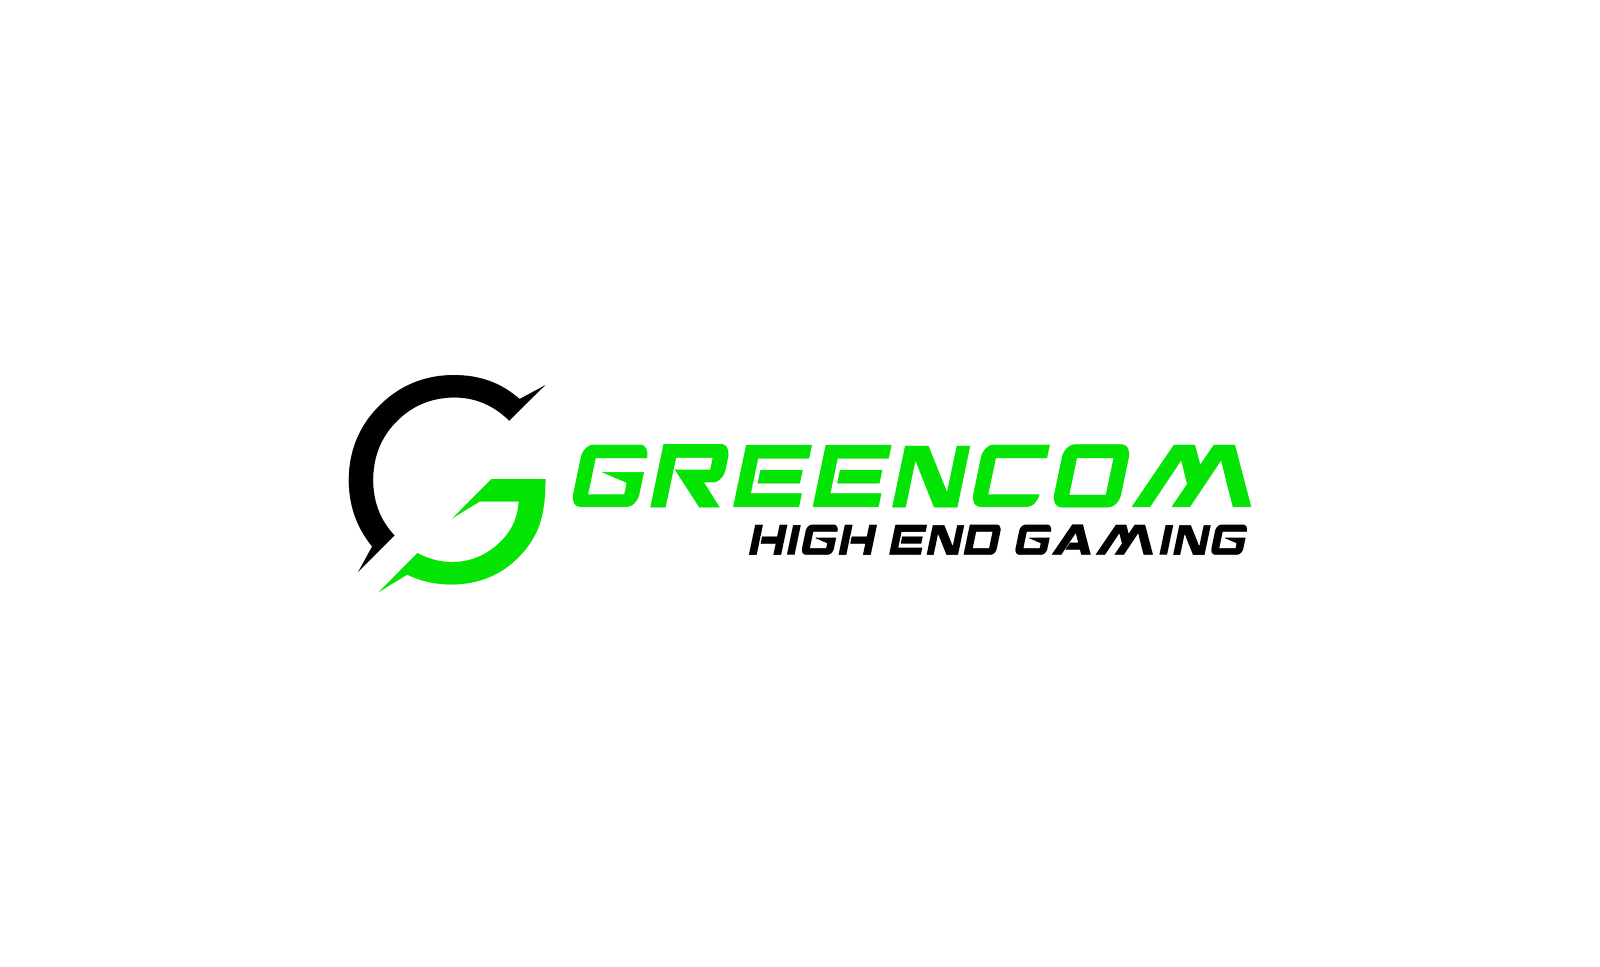 Greencom